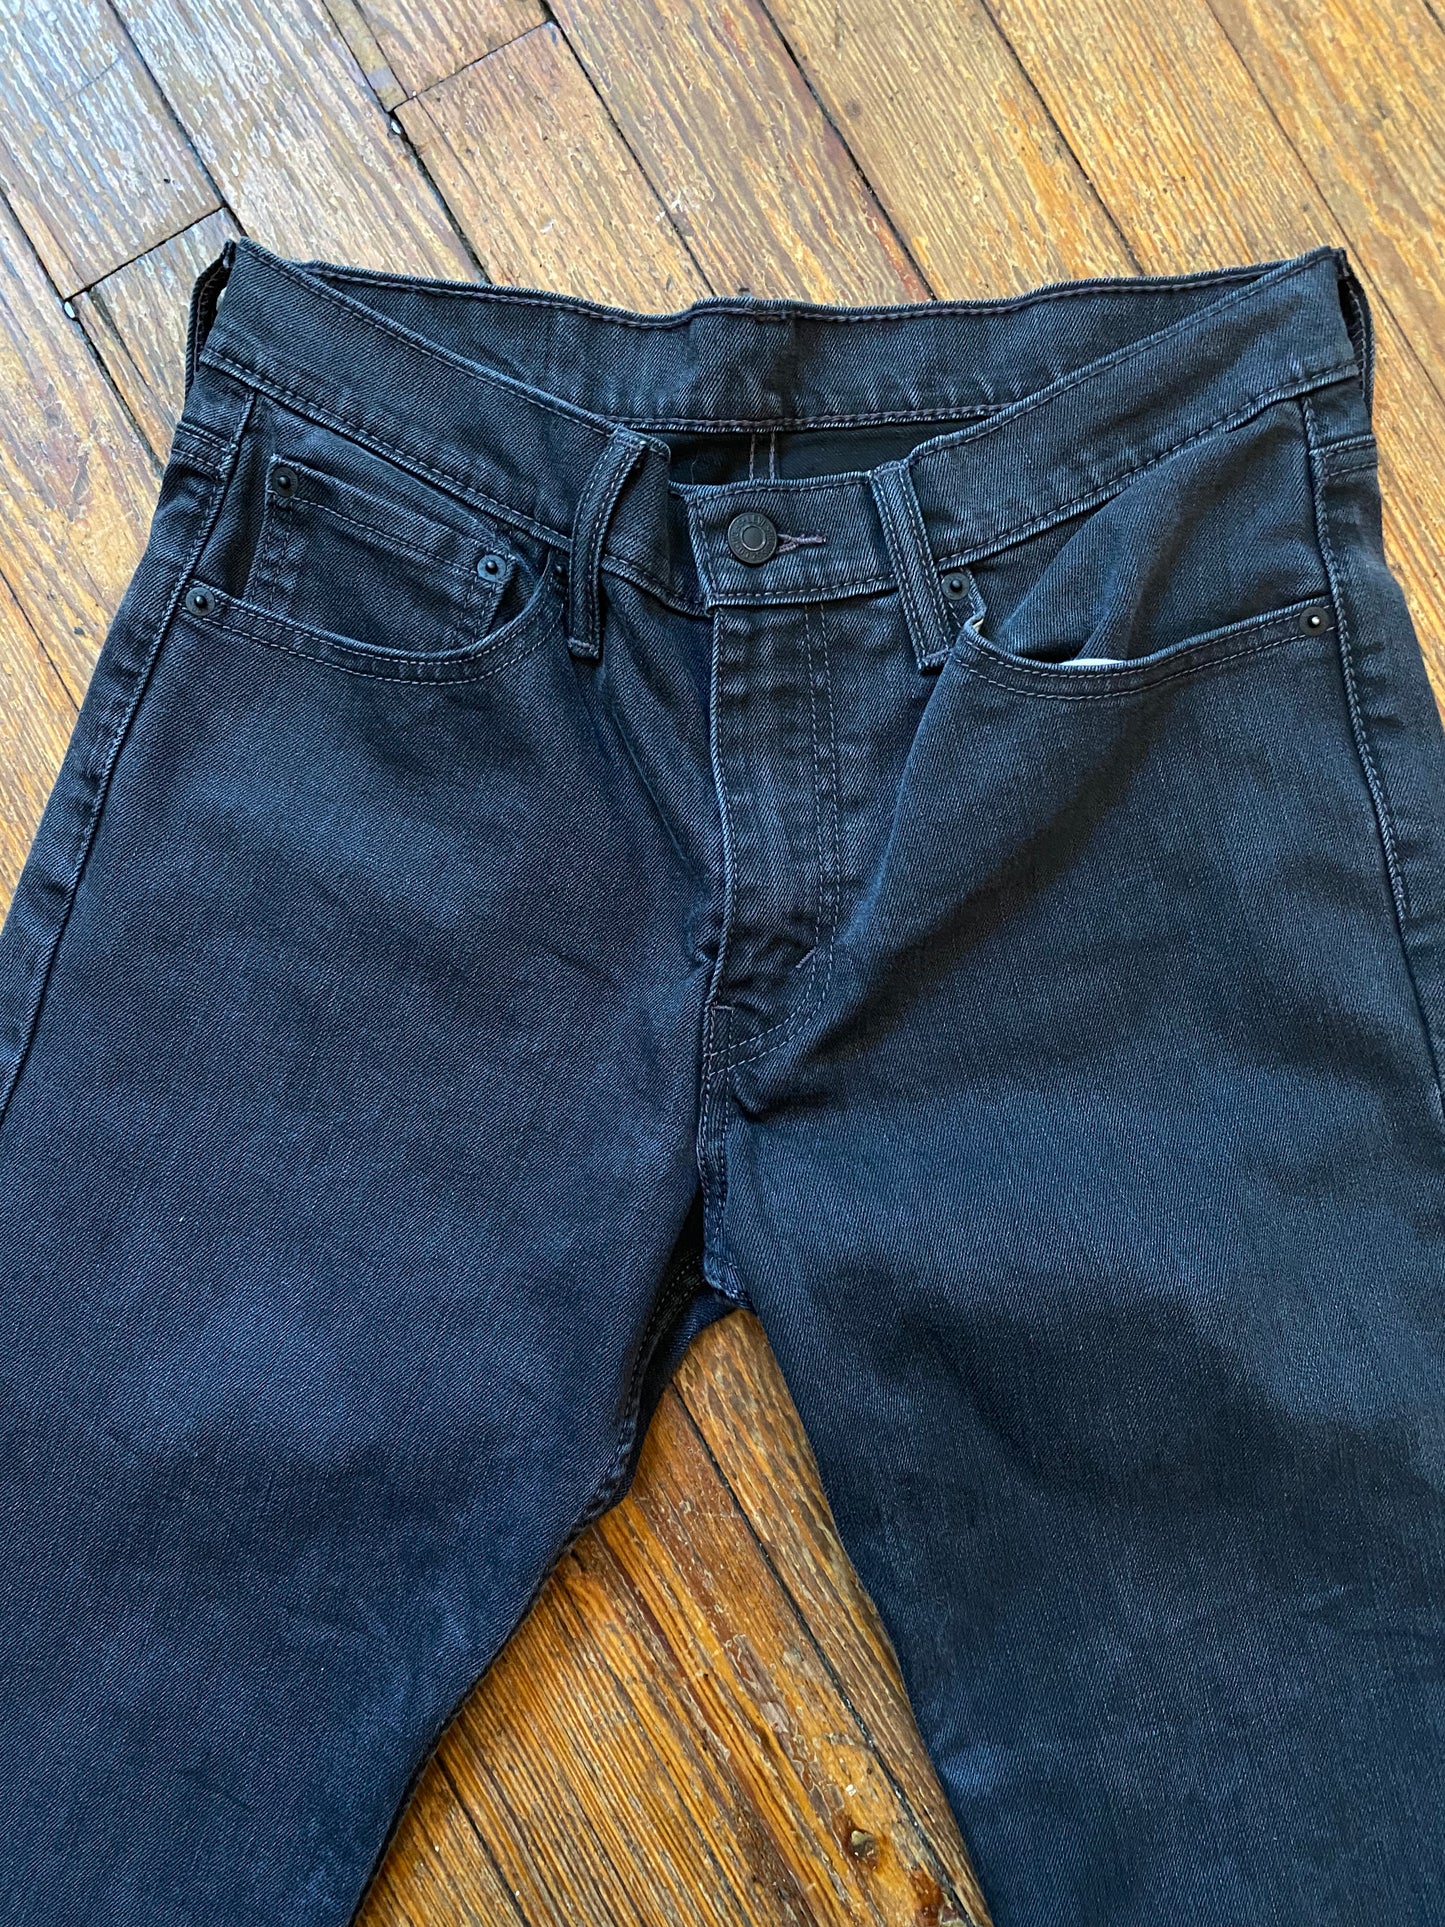 Levi’s Dark Grey 511 Slim Jeans